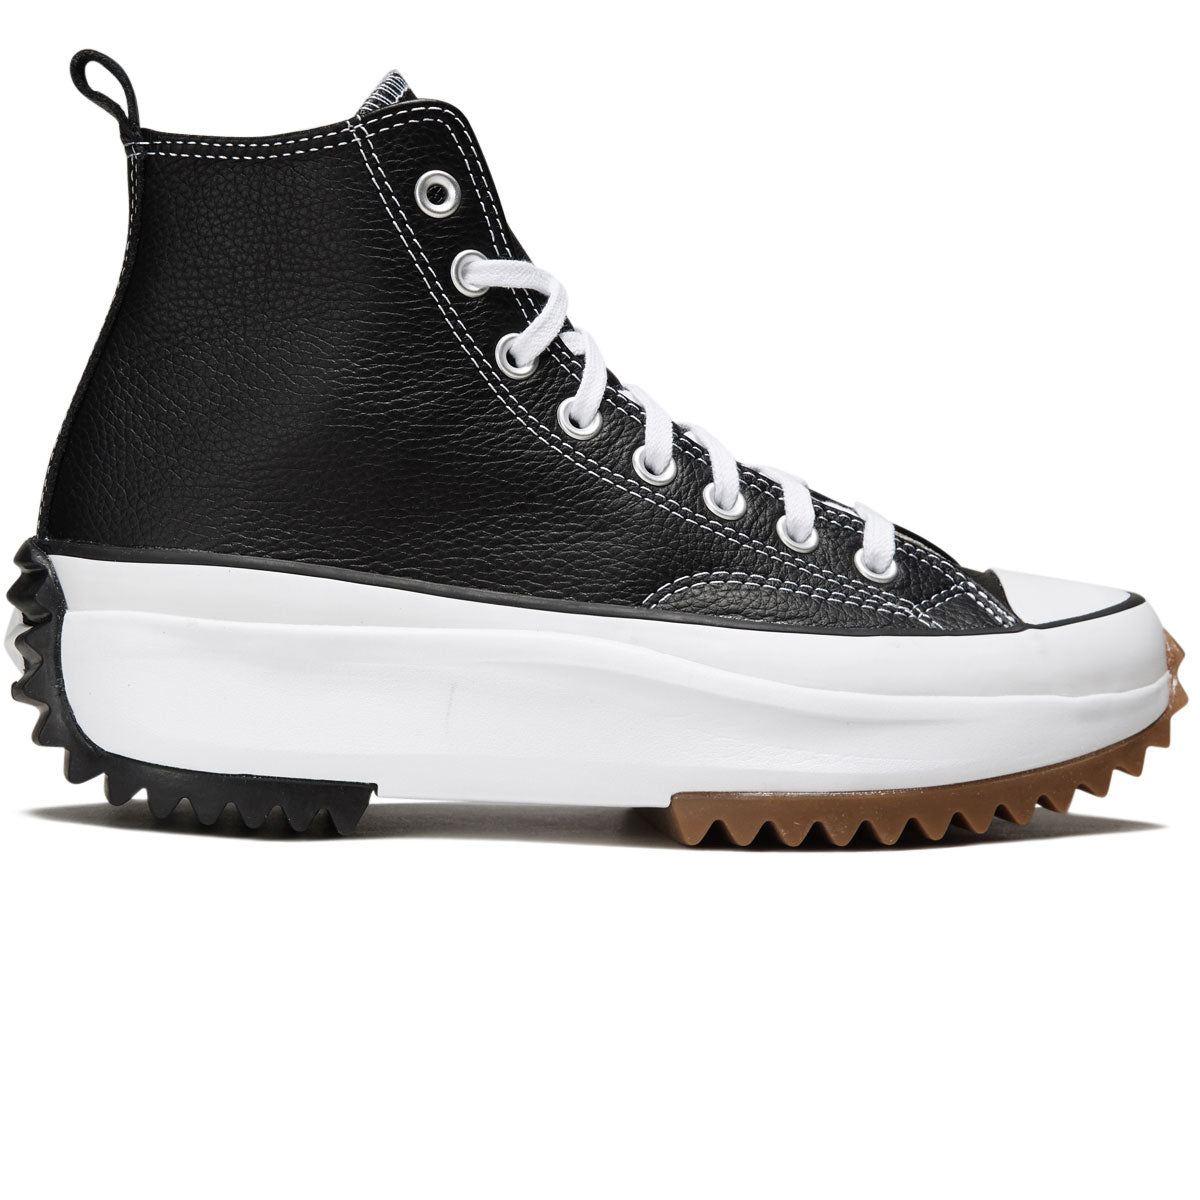 Converse Run Star Hike Hi Shoes - Black/White/Gum image 1